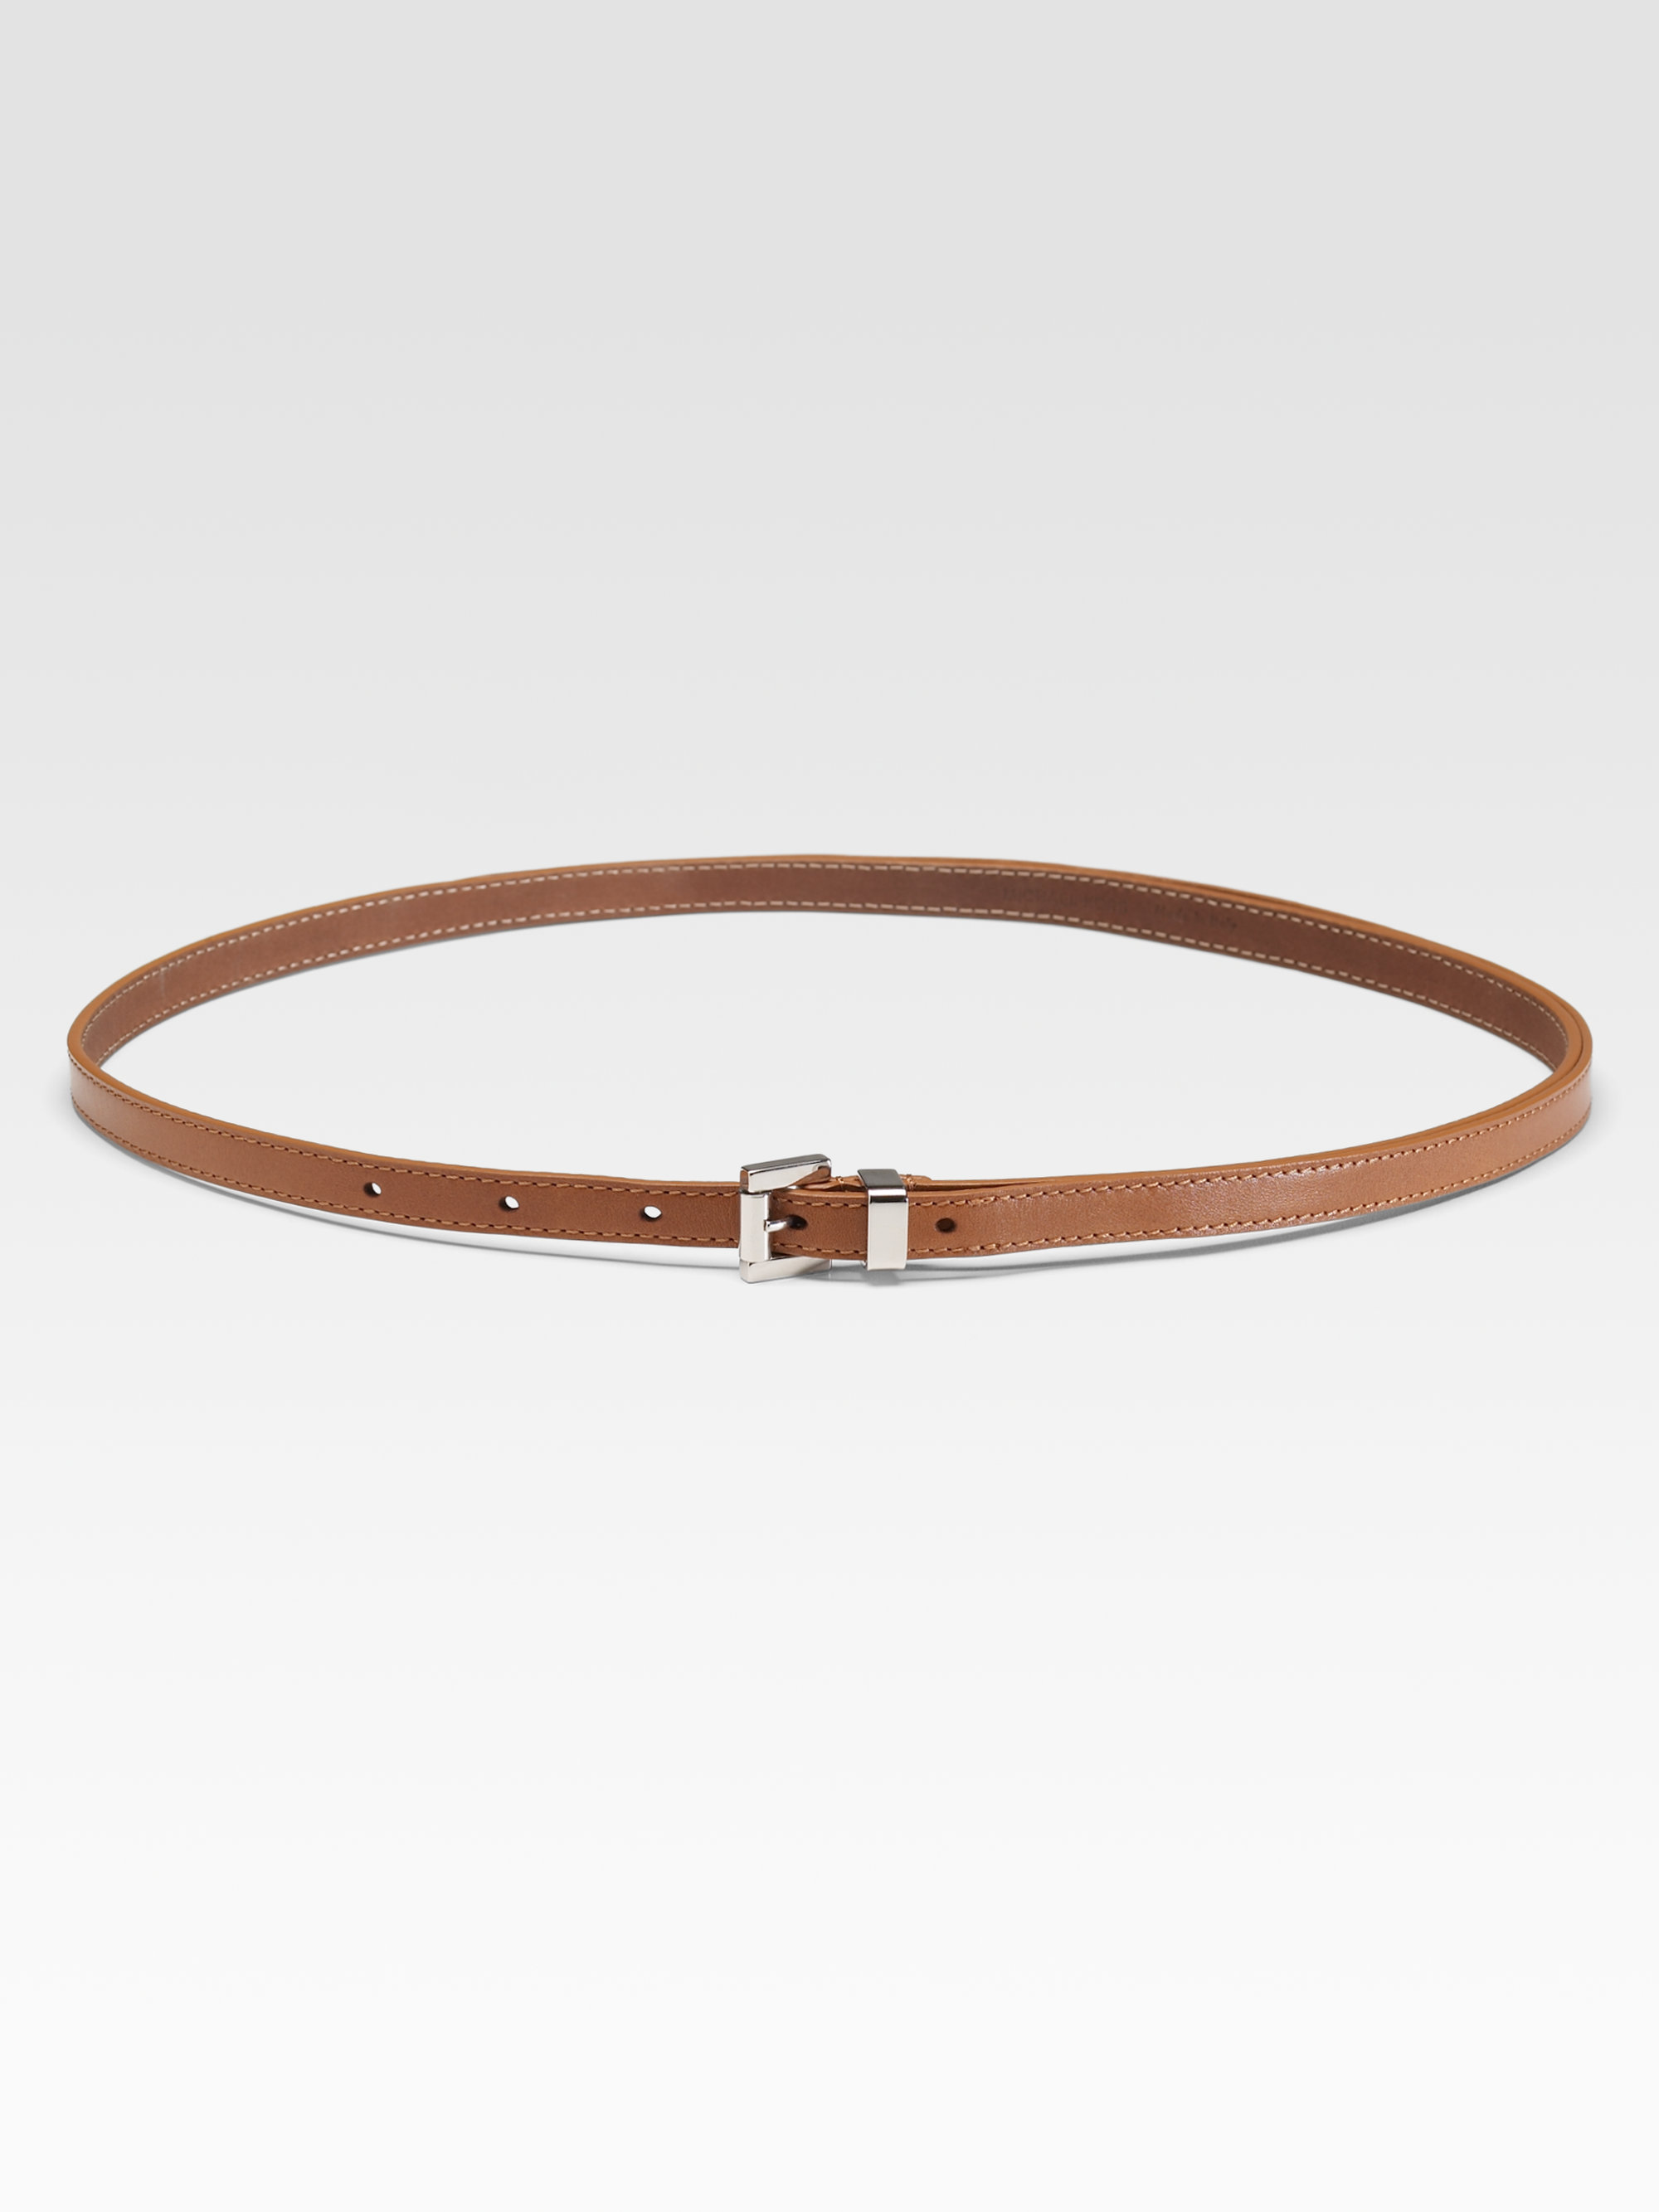 Michael Kors Leather Skinny Waist Belt in Brown - Lyst